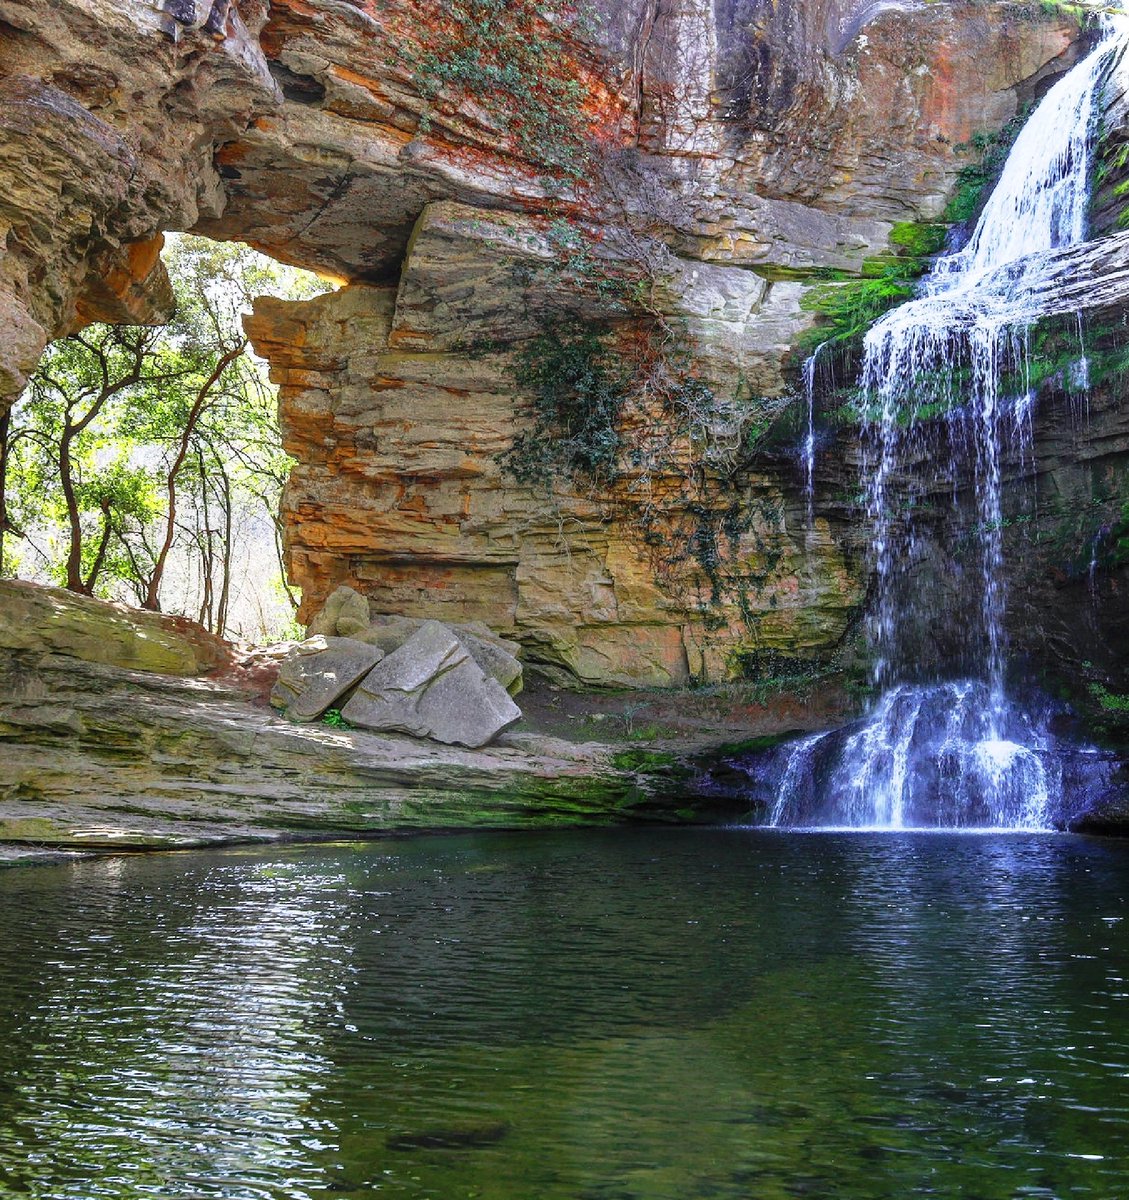 La Foradada 'hidden' cave waterfall in Catalonia, Spain  🇪🇸

#nature #naturephotography #NatureBeauty #scenic #photography